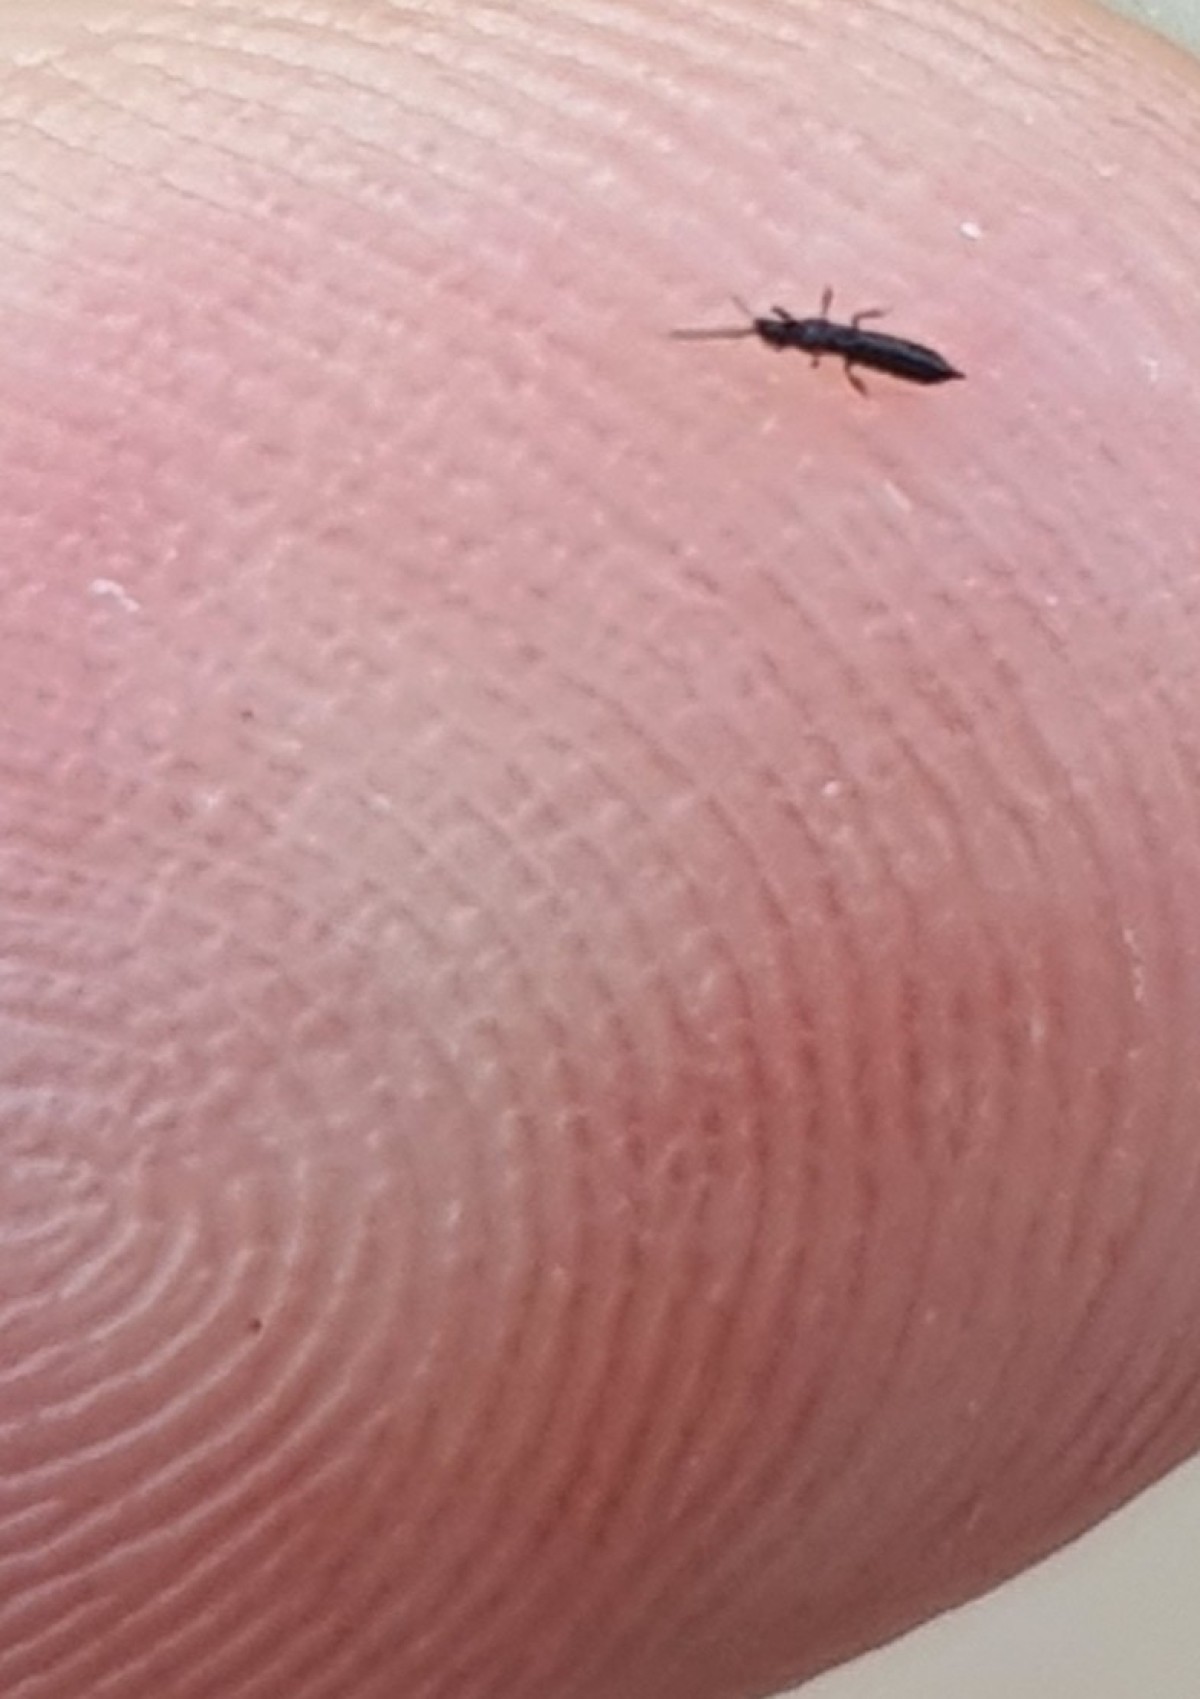 Identifying Small Black Bugs X6 